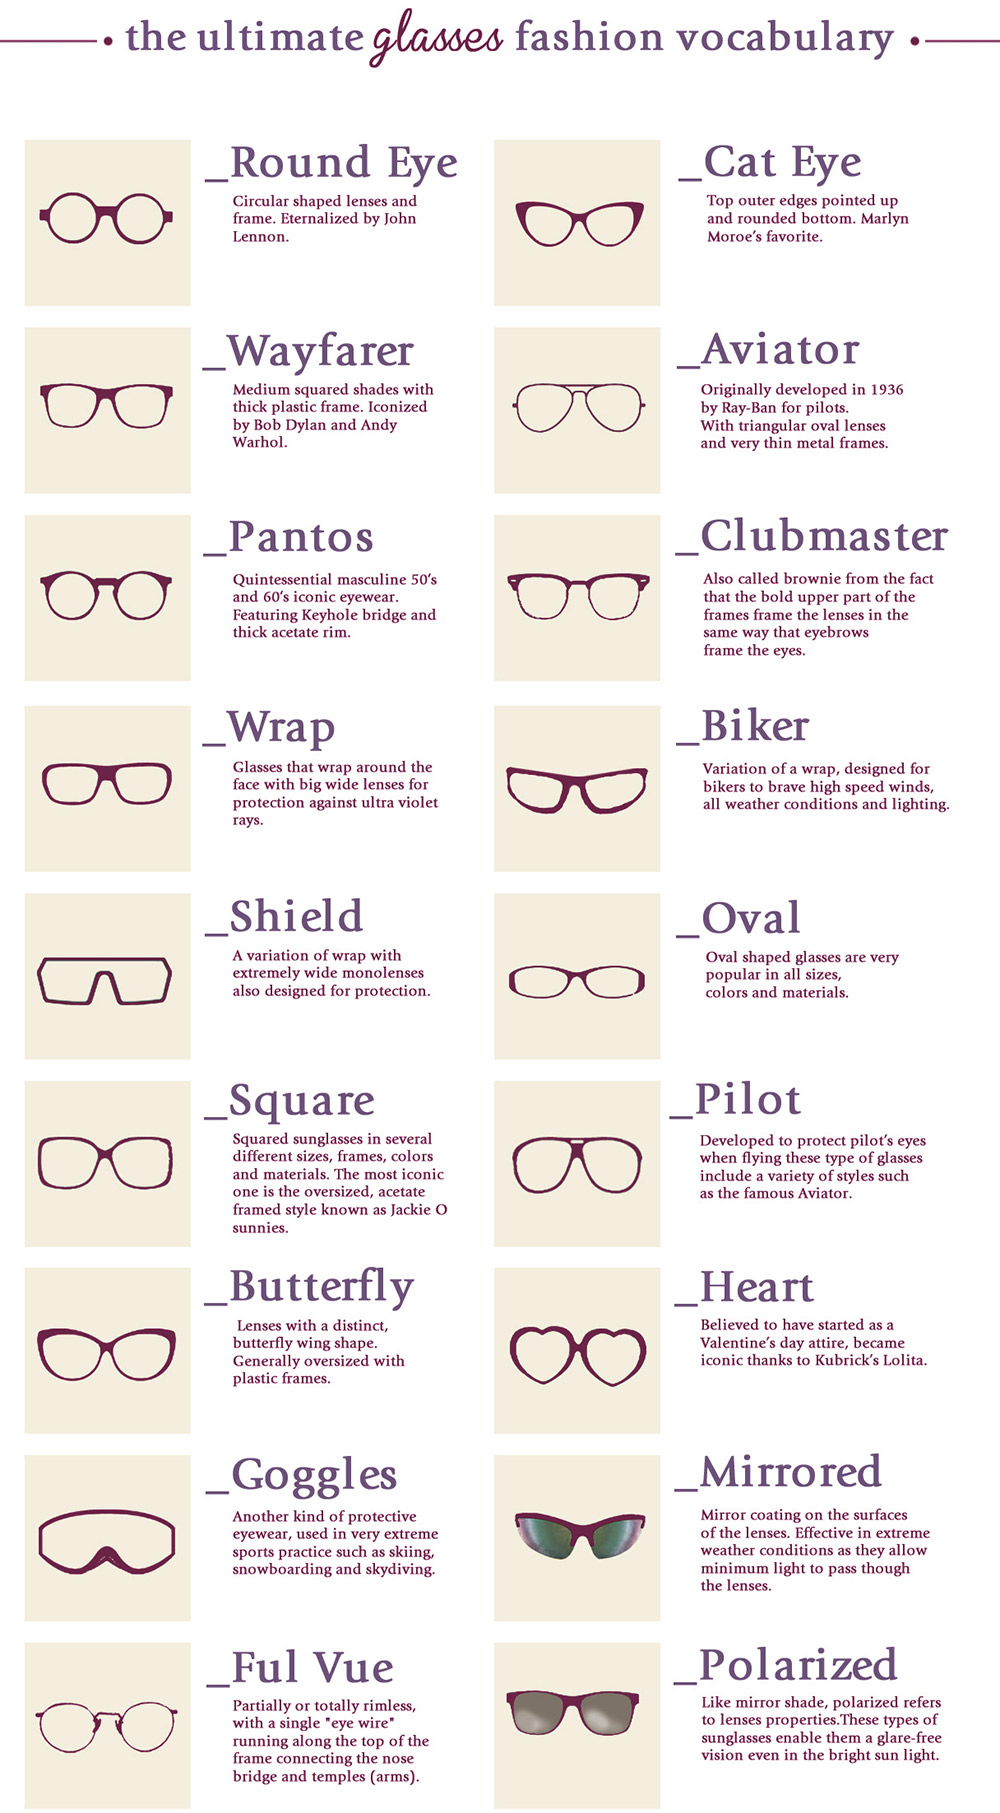 The ultimate glasses fashion vocabulary